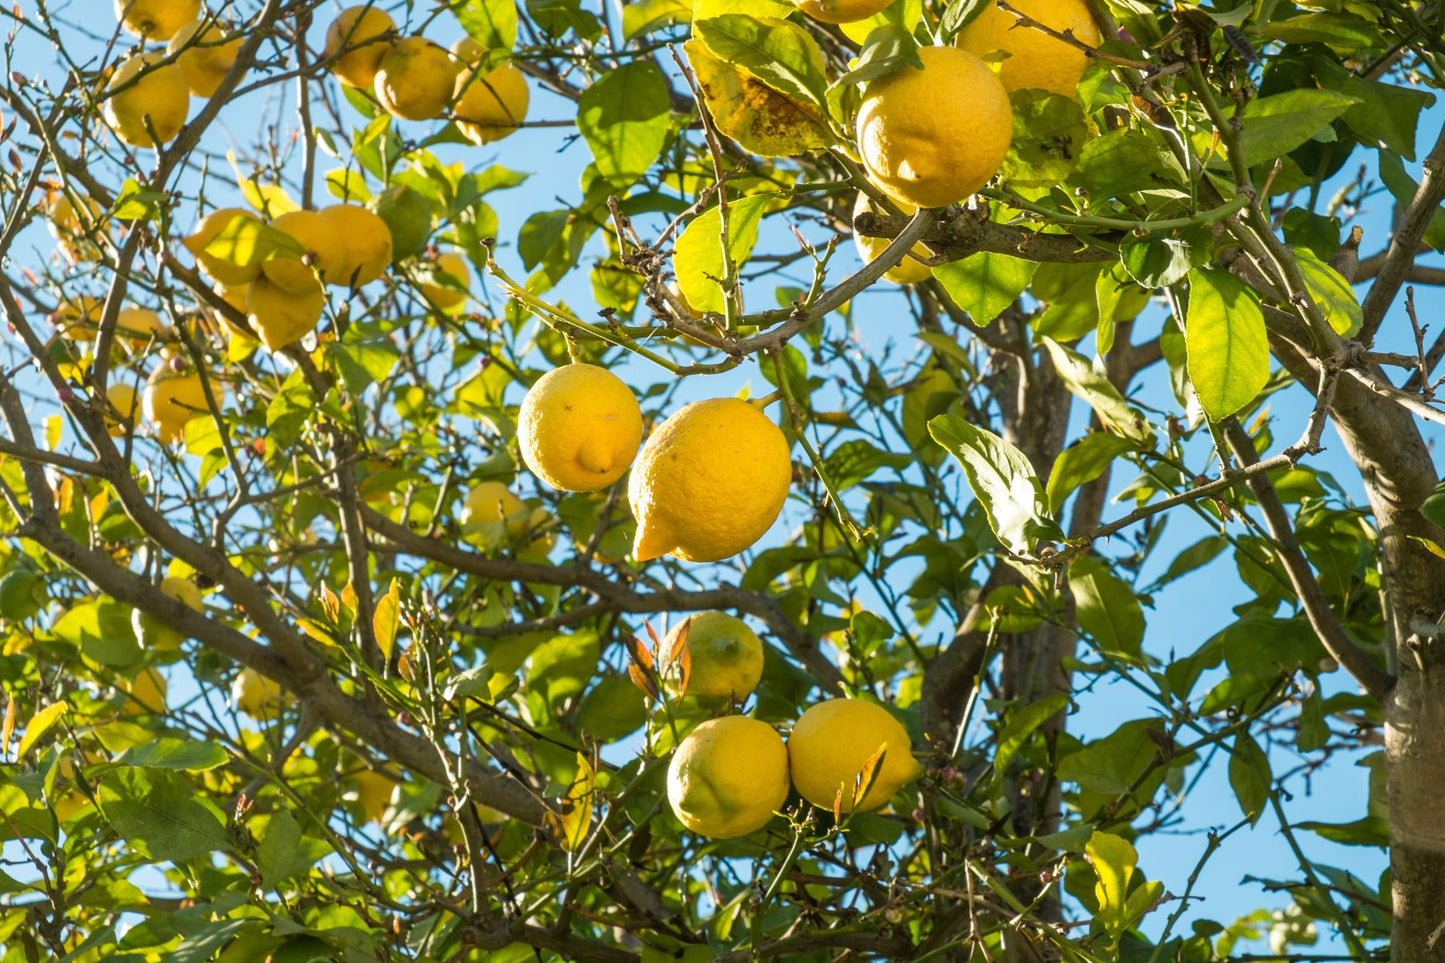 How to Grow Lemons